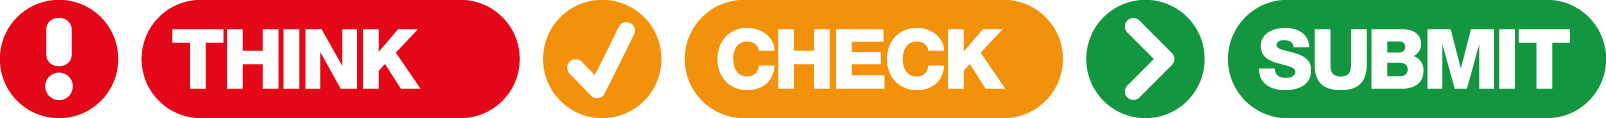 ThinkCheckSubmit logo